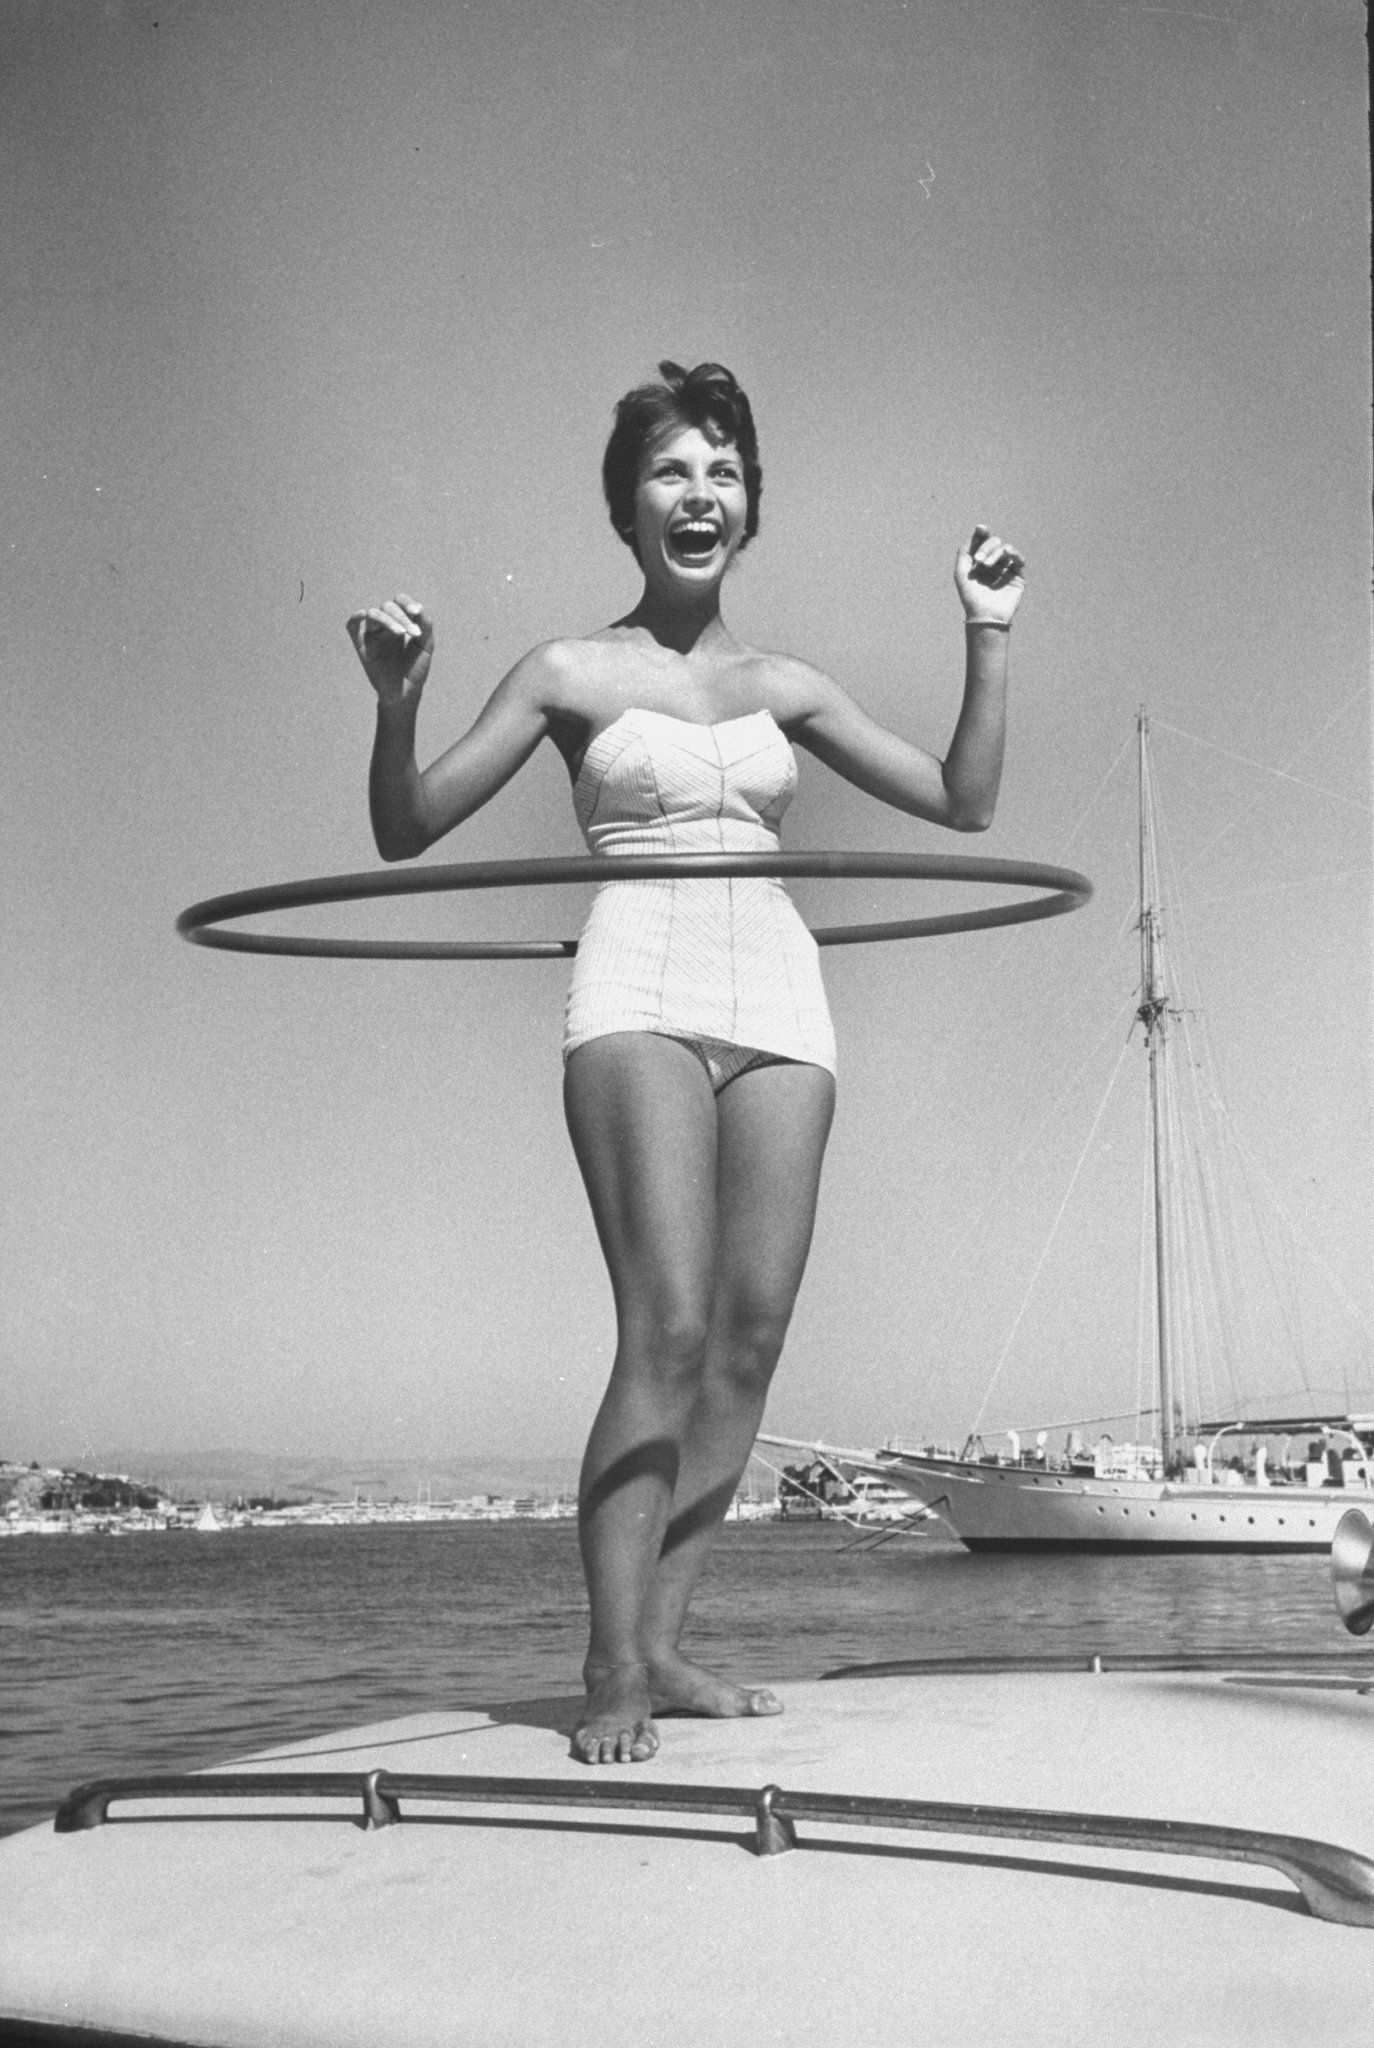 Bonnie Manchester demonstrates a hoop in Newport Beach, California, in 1958.